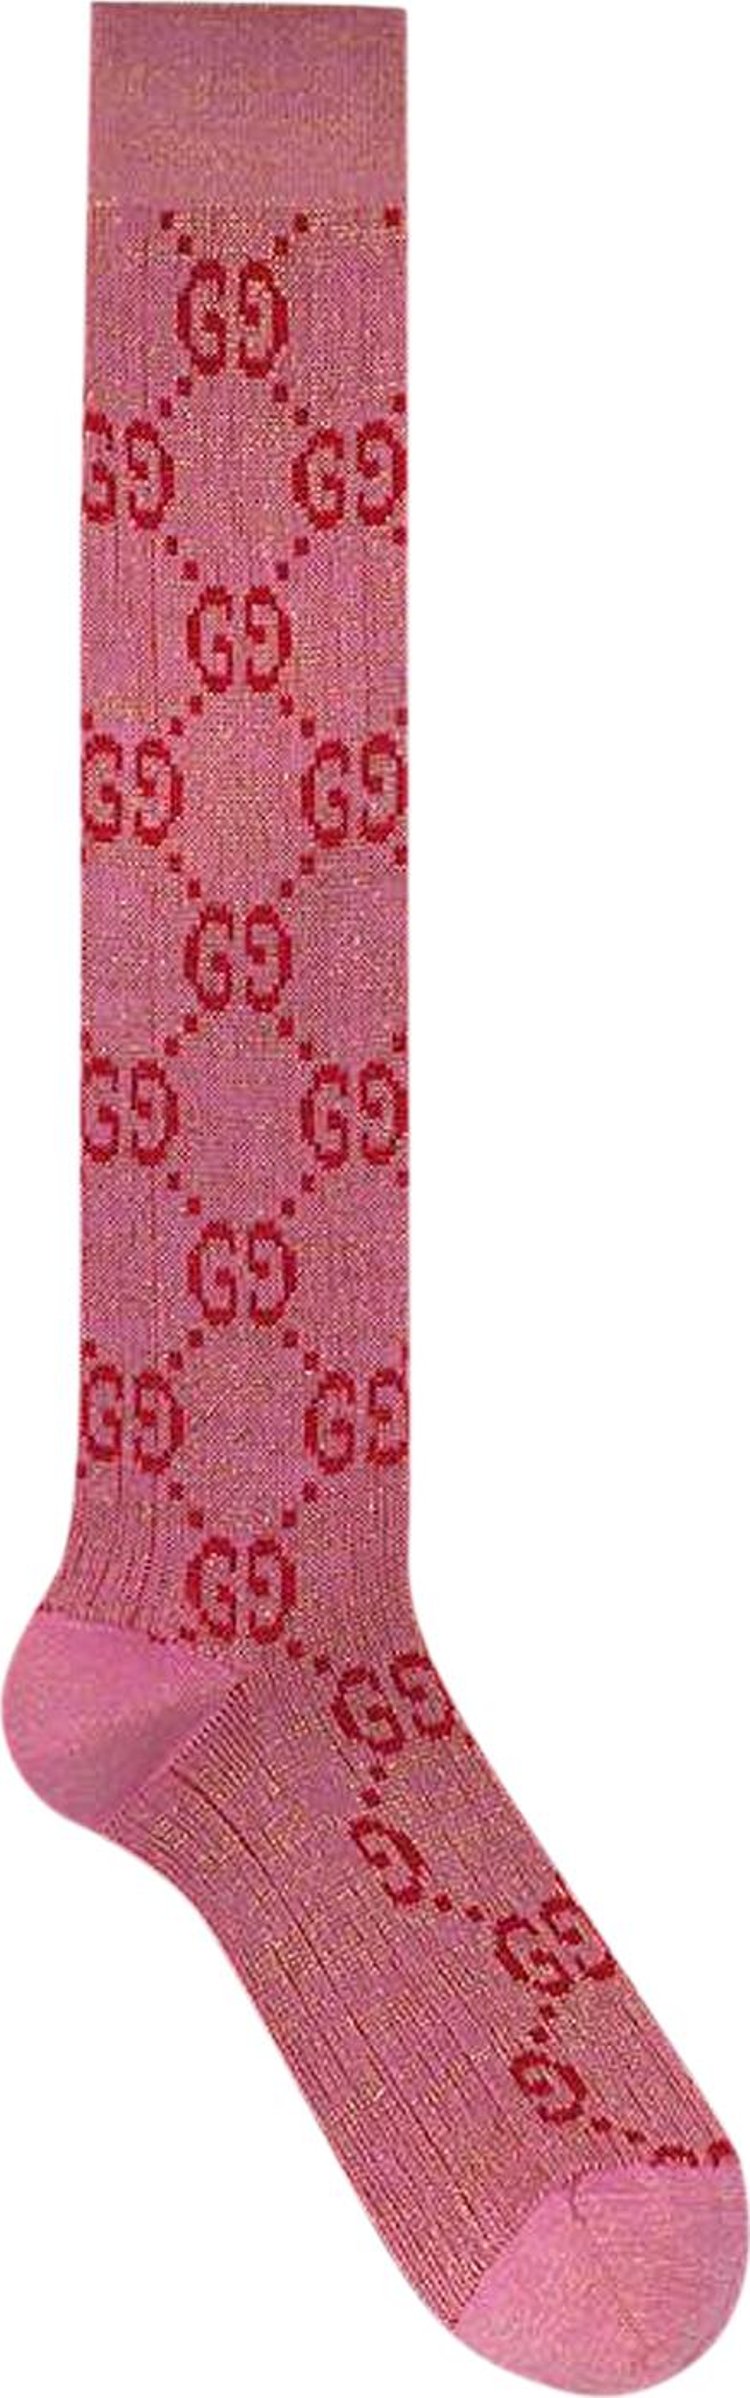 Носки Gucci Cotton GG Socks Roseate/Pink roseate elegance